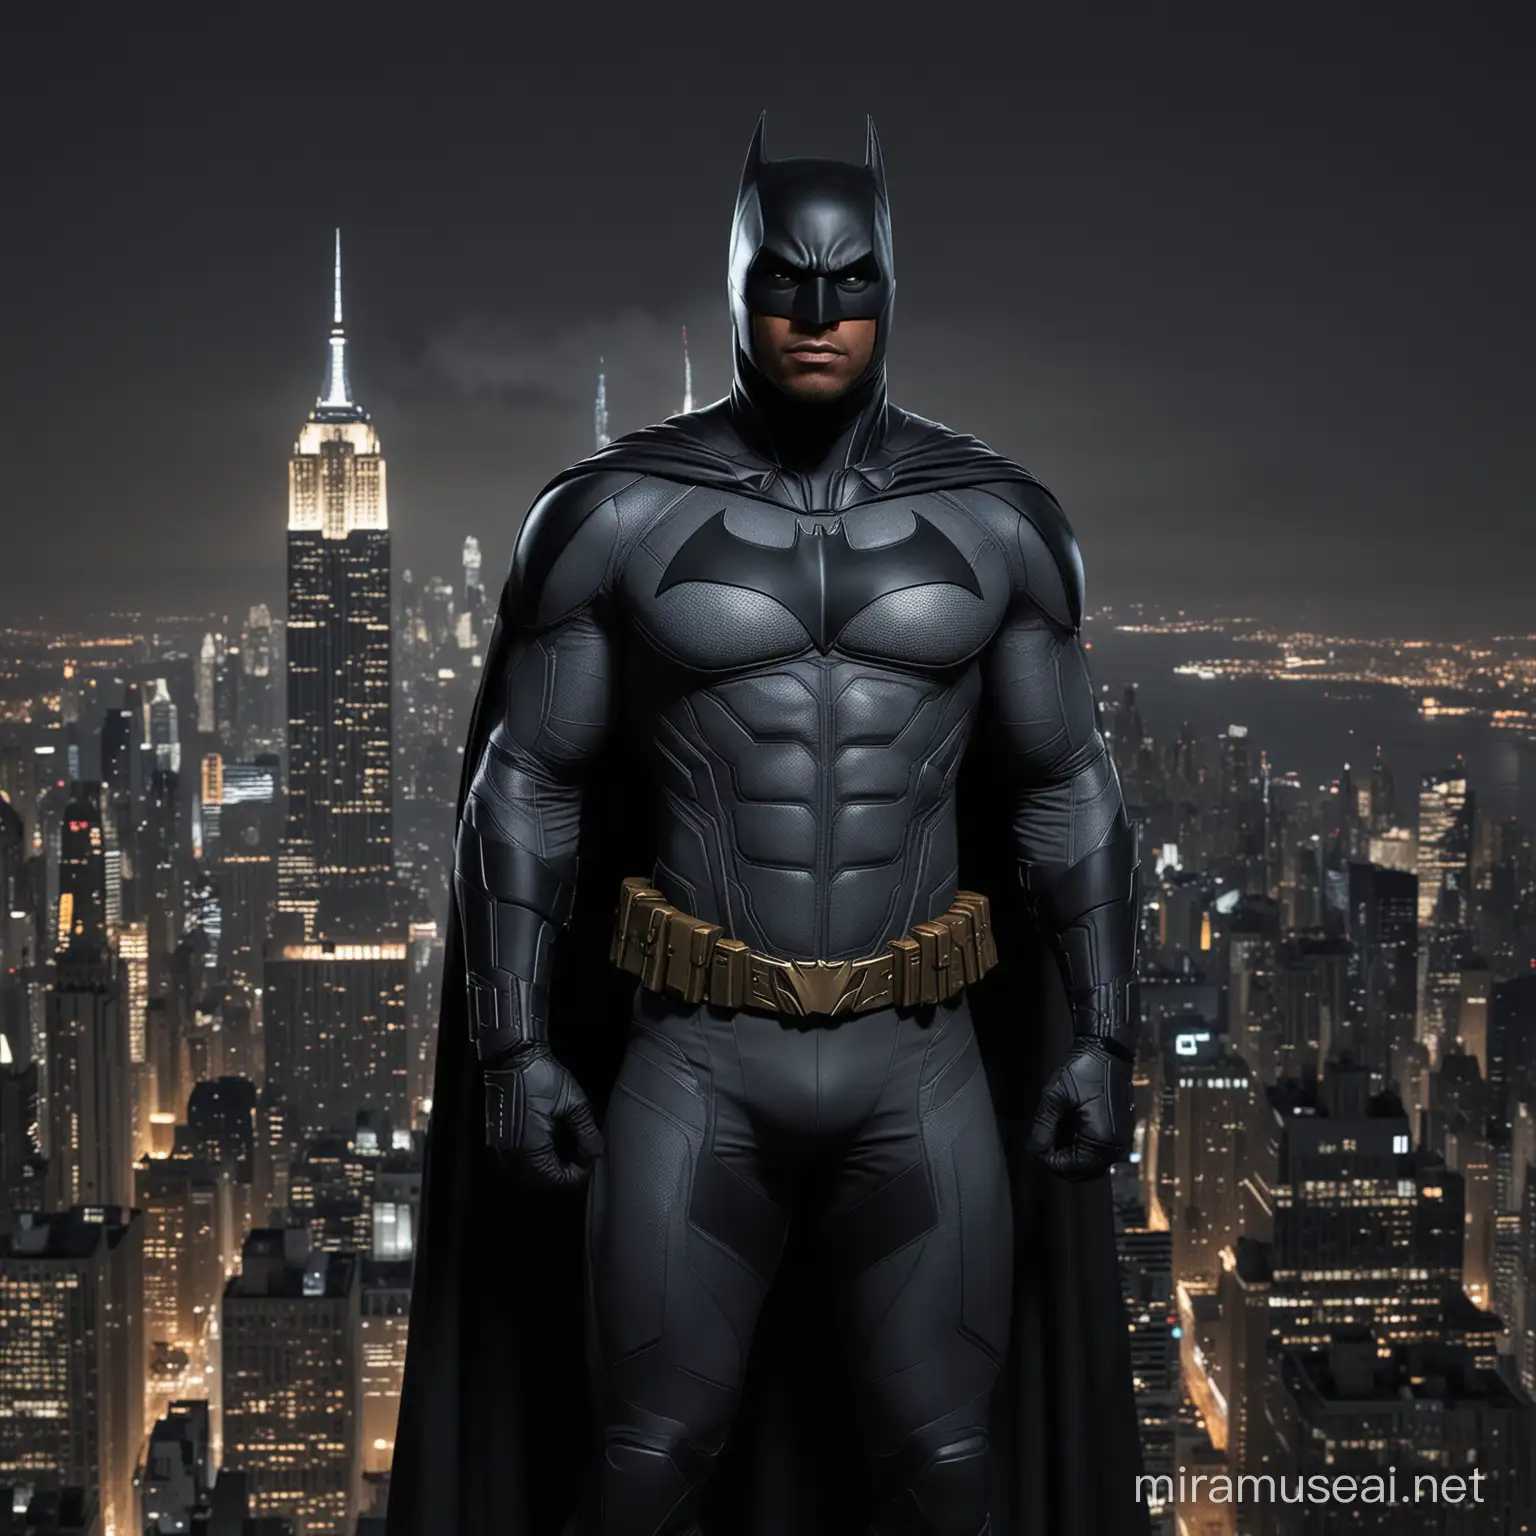 Rege Jean Page as Batman Standing on Manhattan Skyscraper at Night